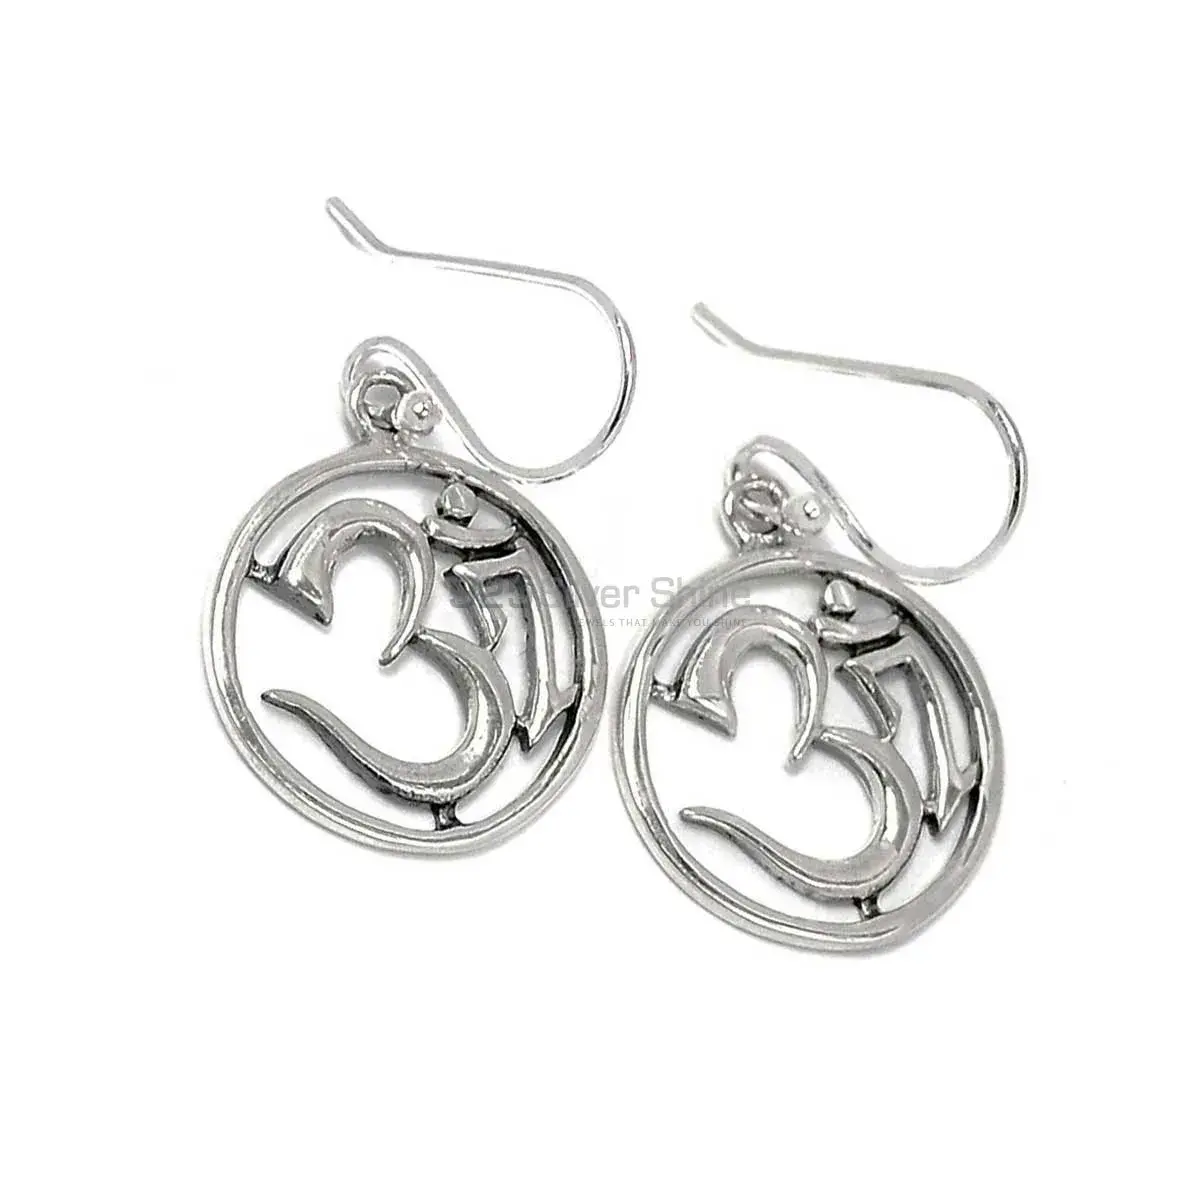 Wholesale Solid 925 Silver Oxidized Earrings Jewelry 925SE2889_3